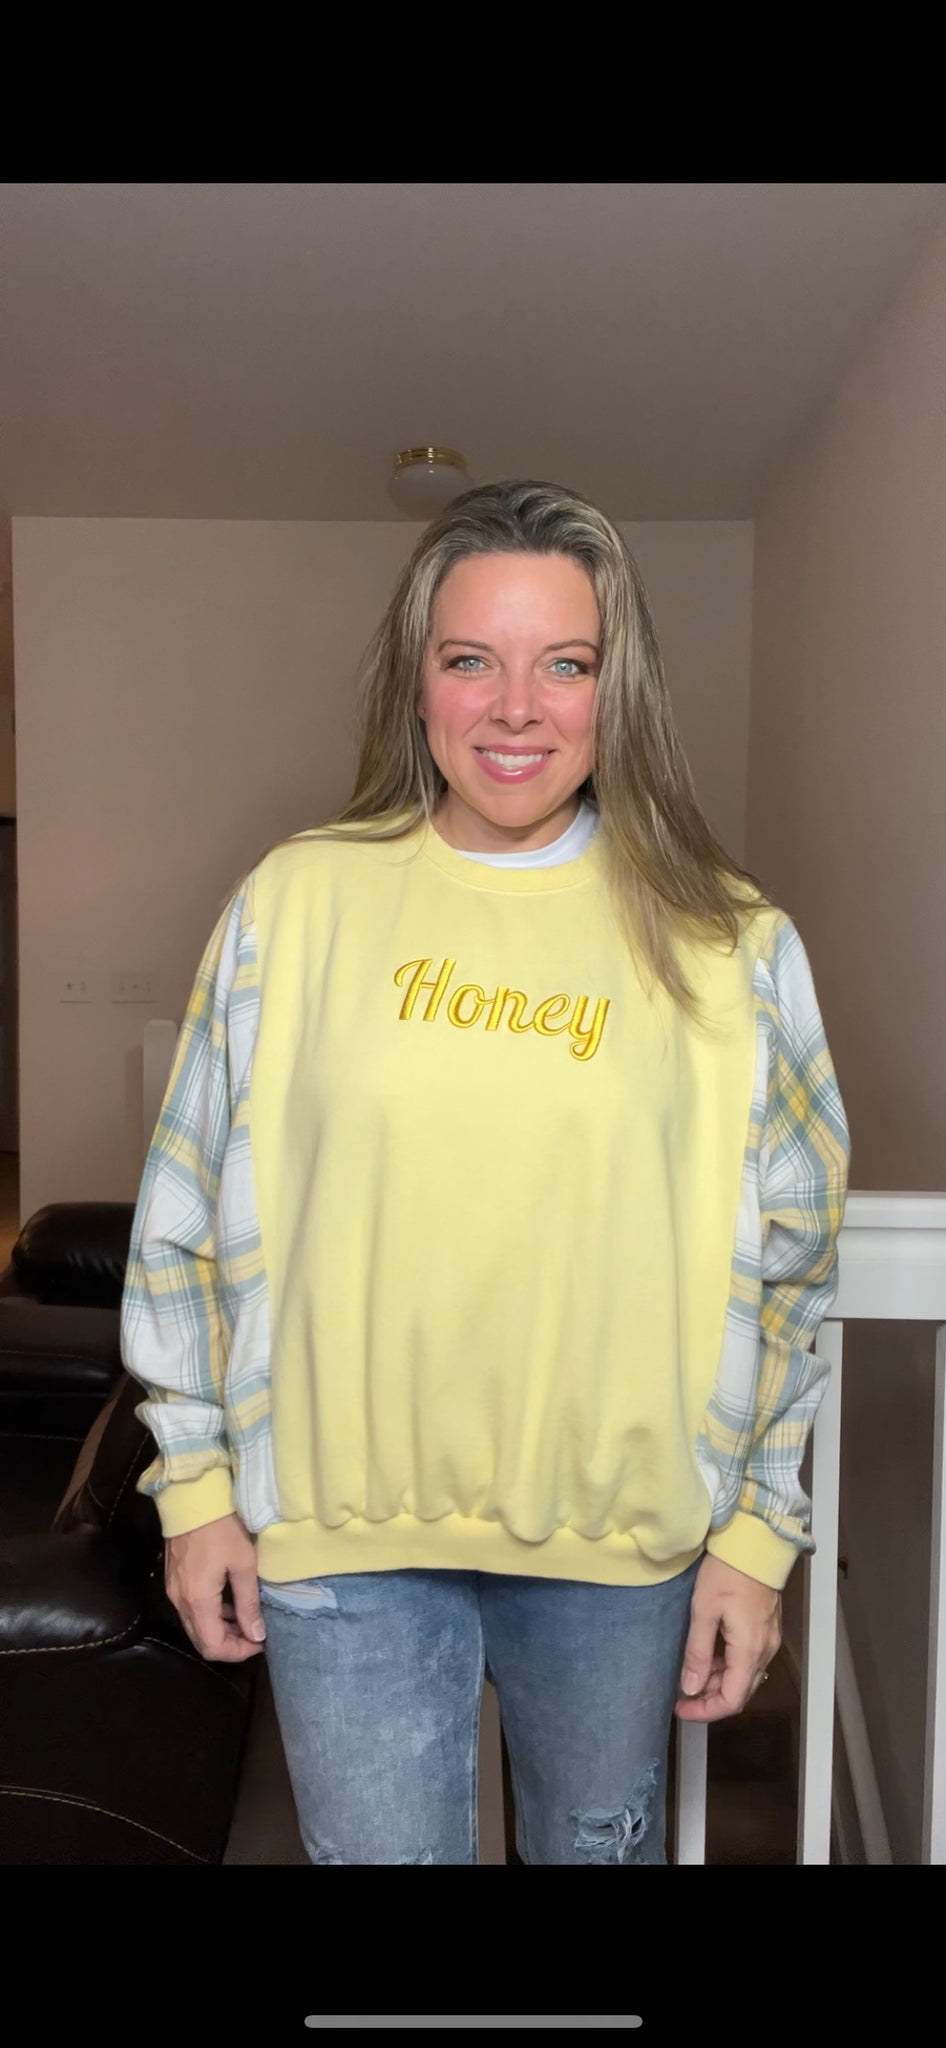 Honey - woman’s large